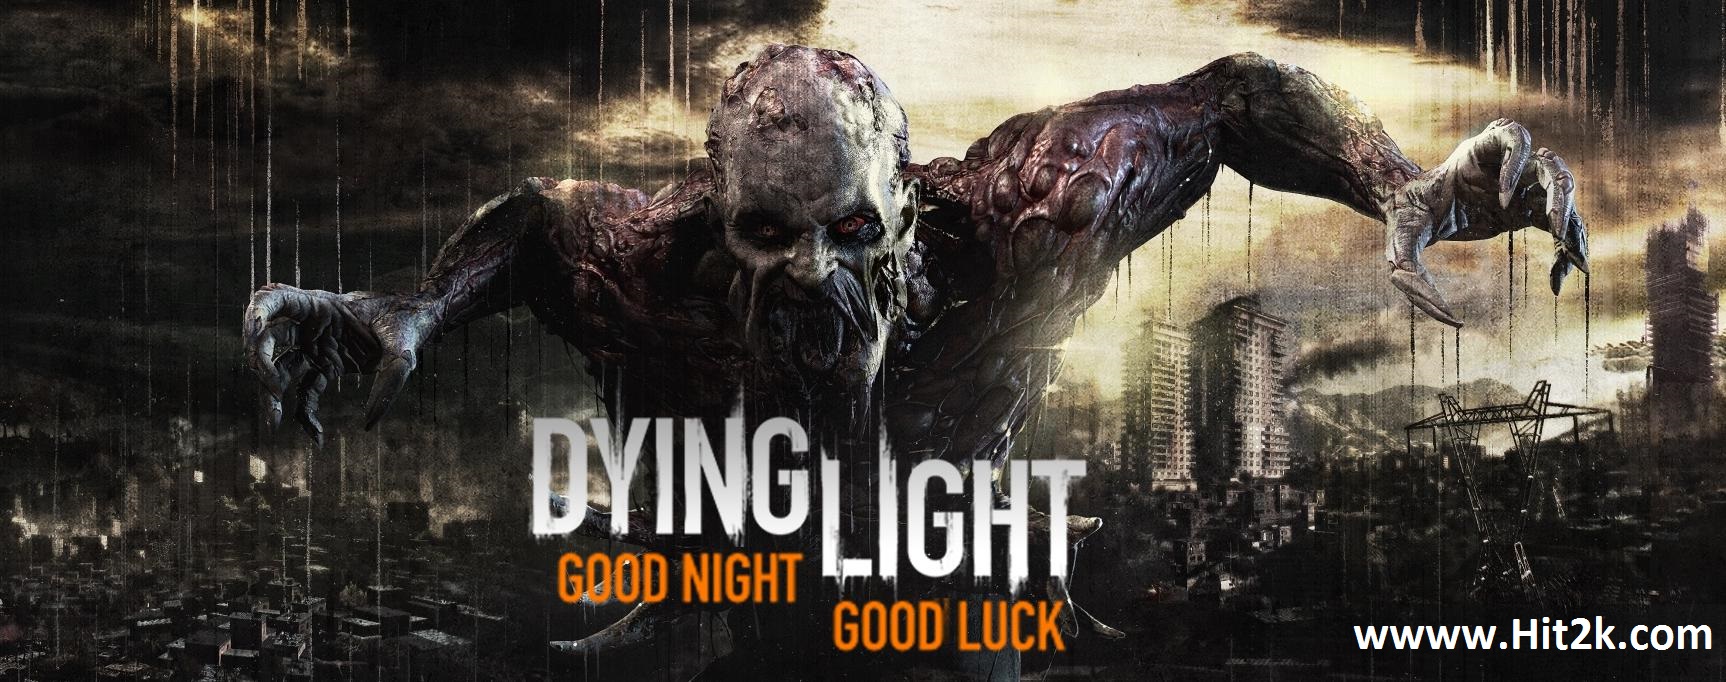 Dying Light Full Repack + DLC Latest Is Here